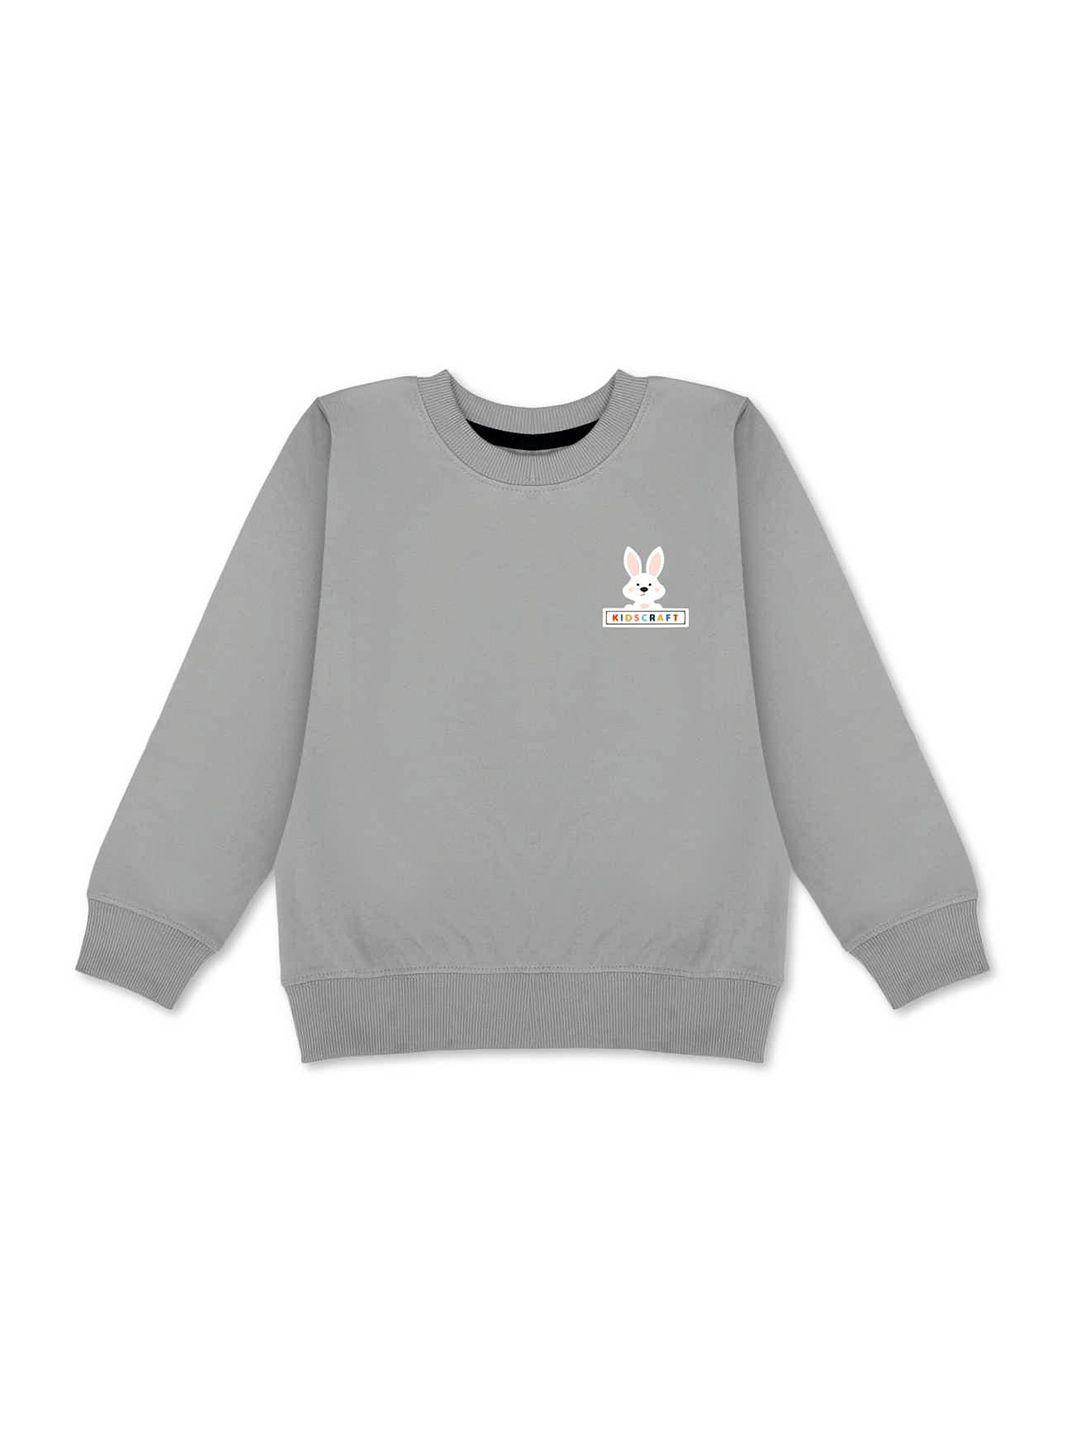 kidscraft-boys-grey-sweatshirt